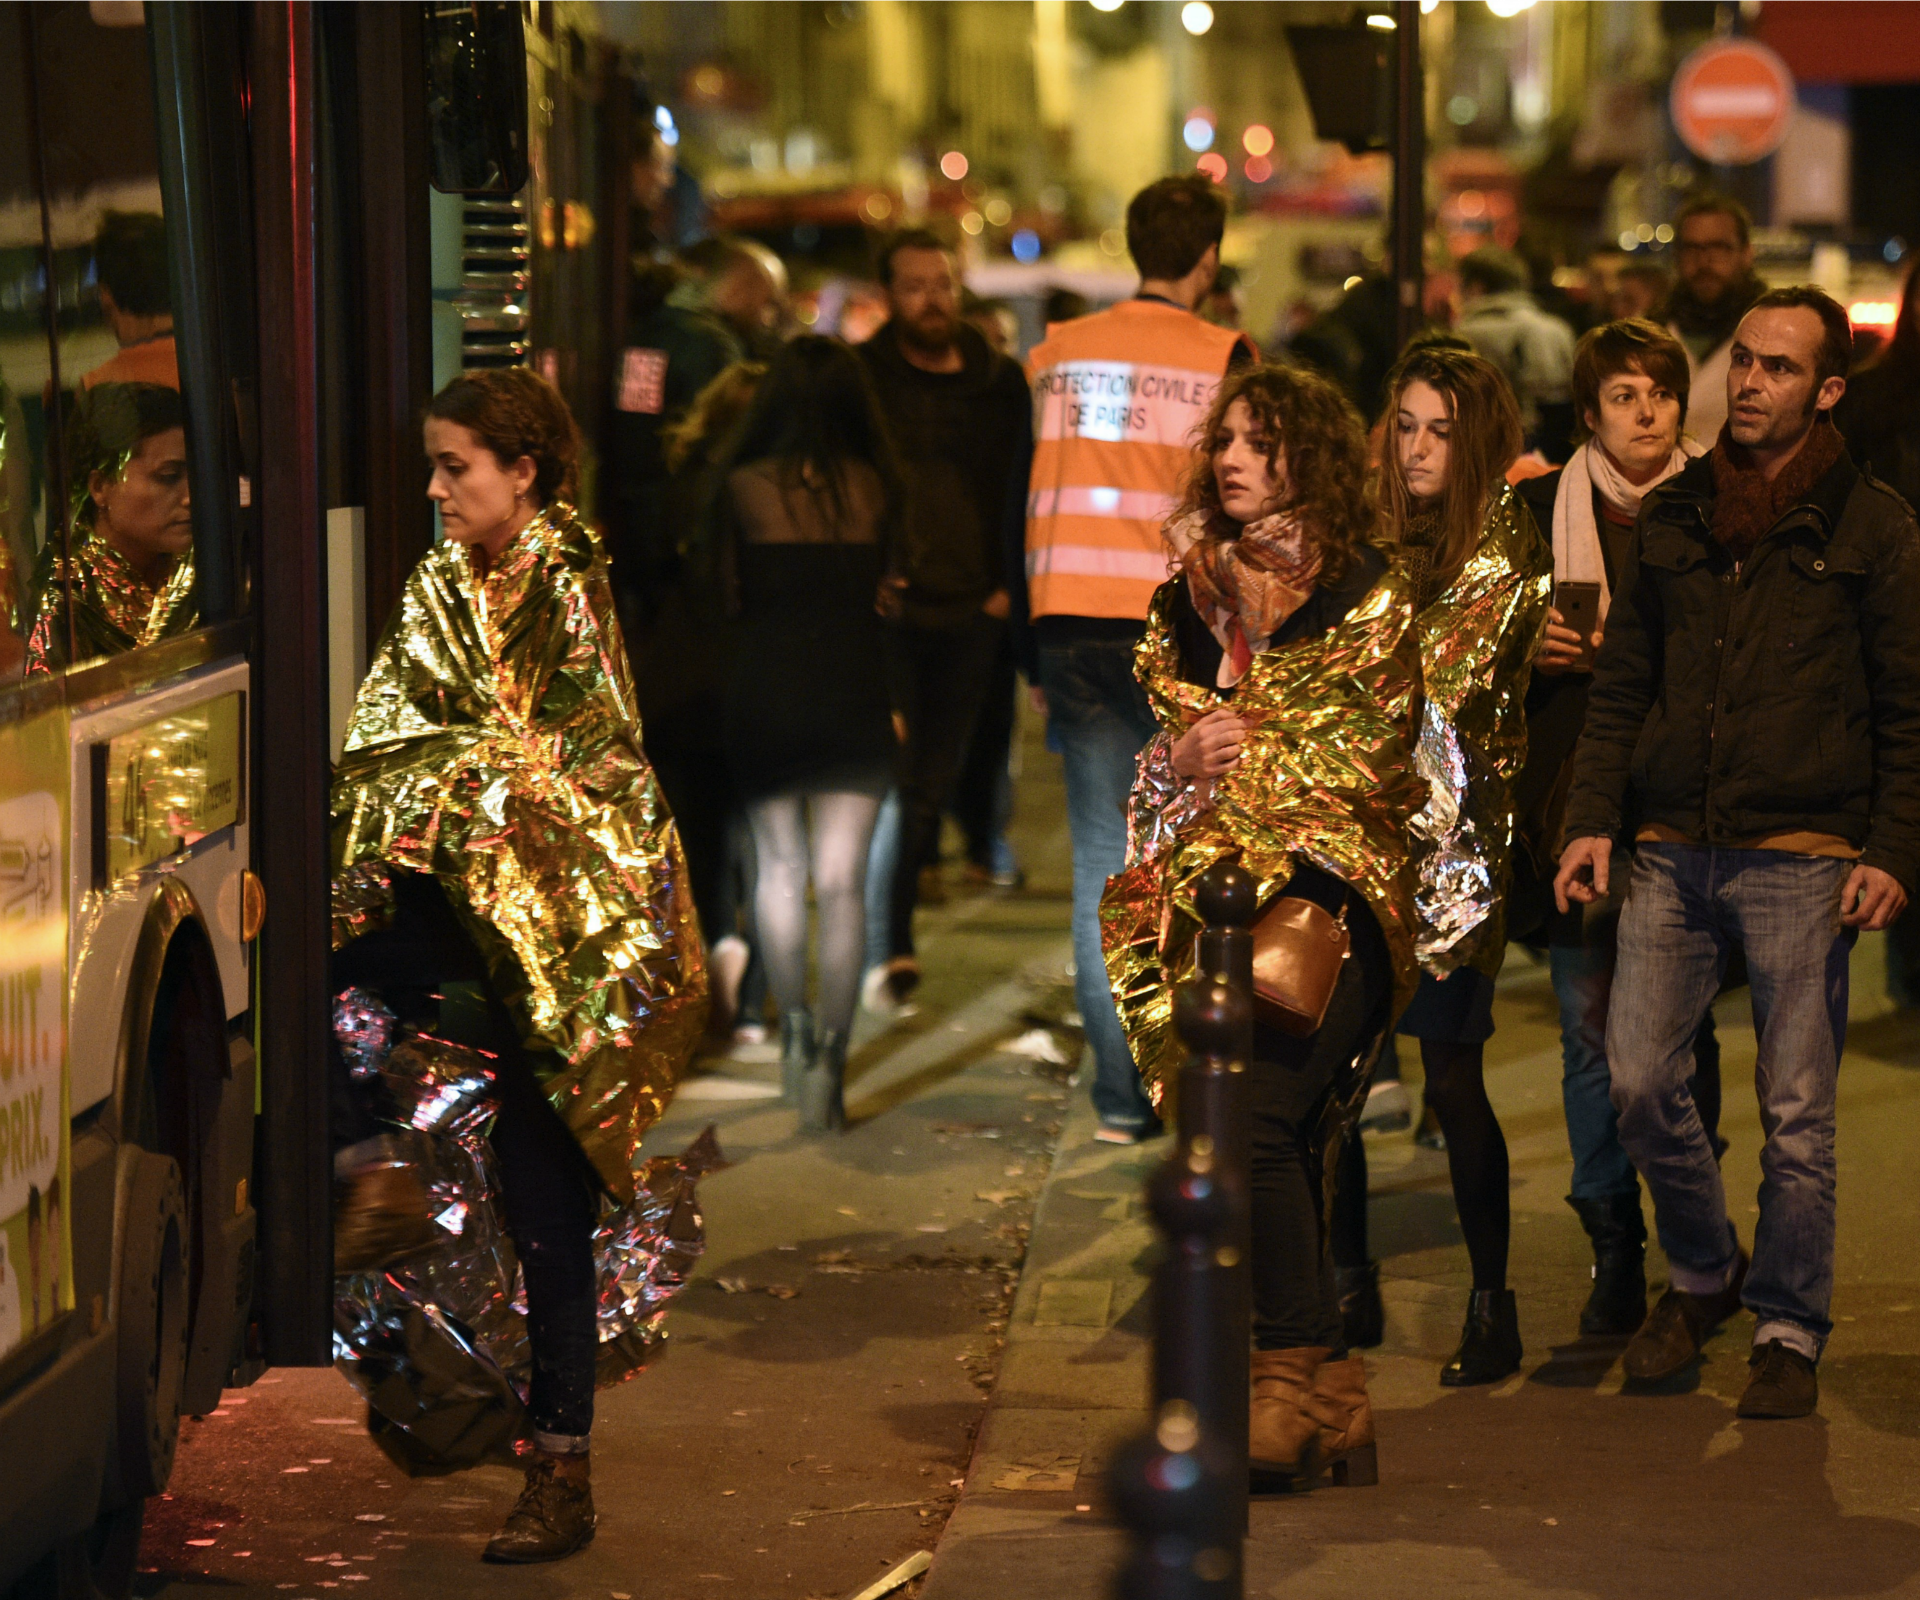 Paris attacks: terrorists strike at young heart of Paris